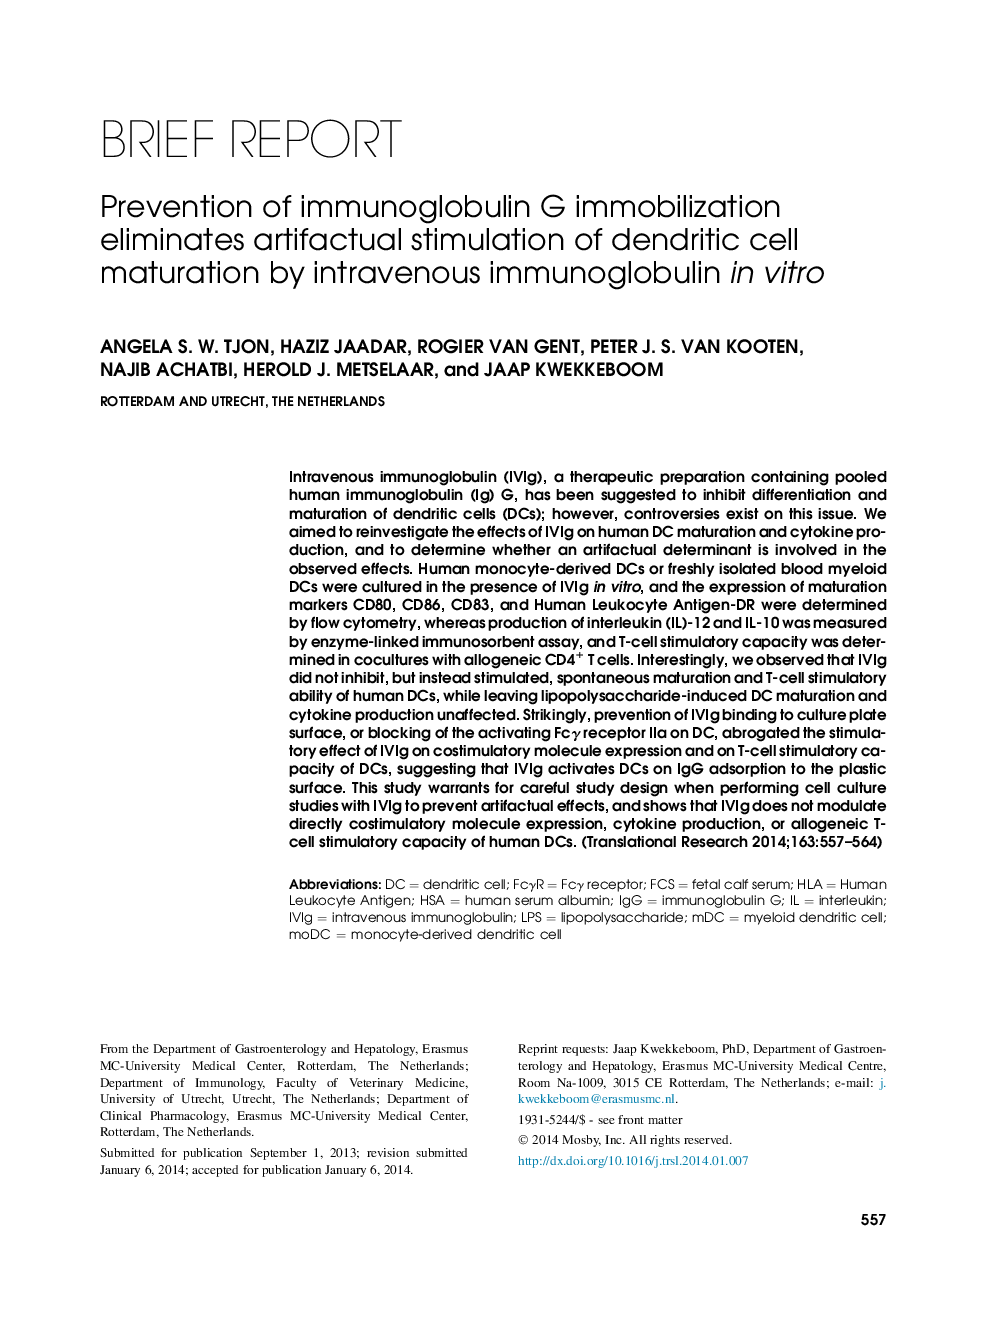 Prevention of immunoglobulin G immobilization eliminates artifactual stimulation of dendritic cell maturation by intravenous immunoglobulin in vitro